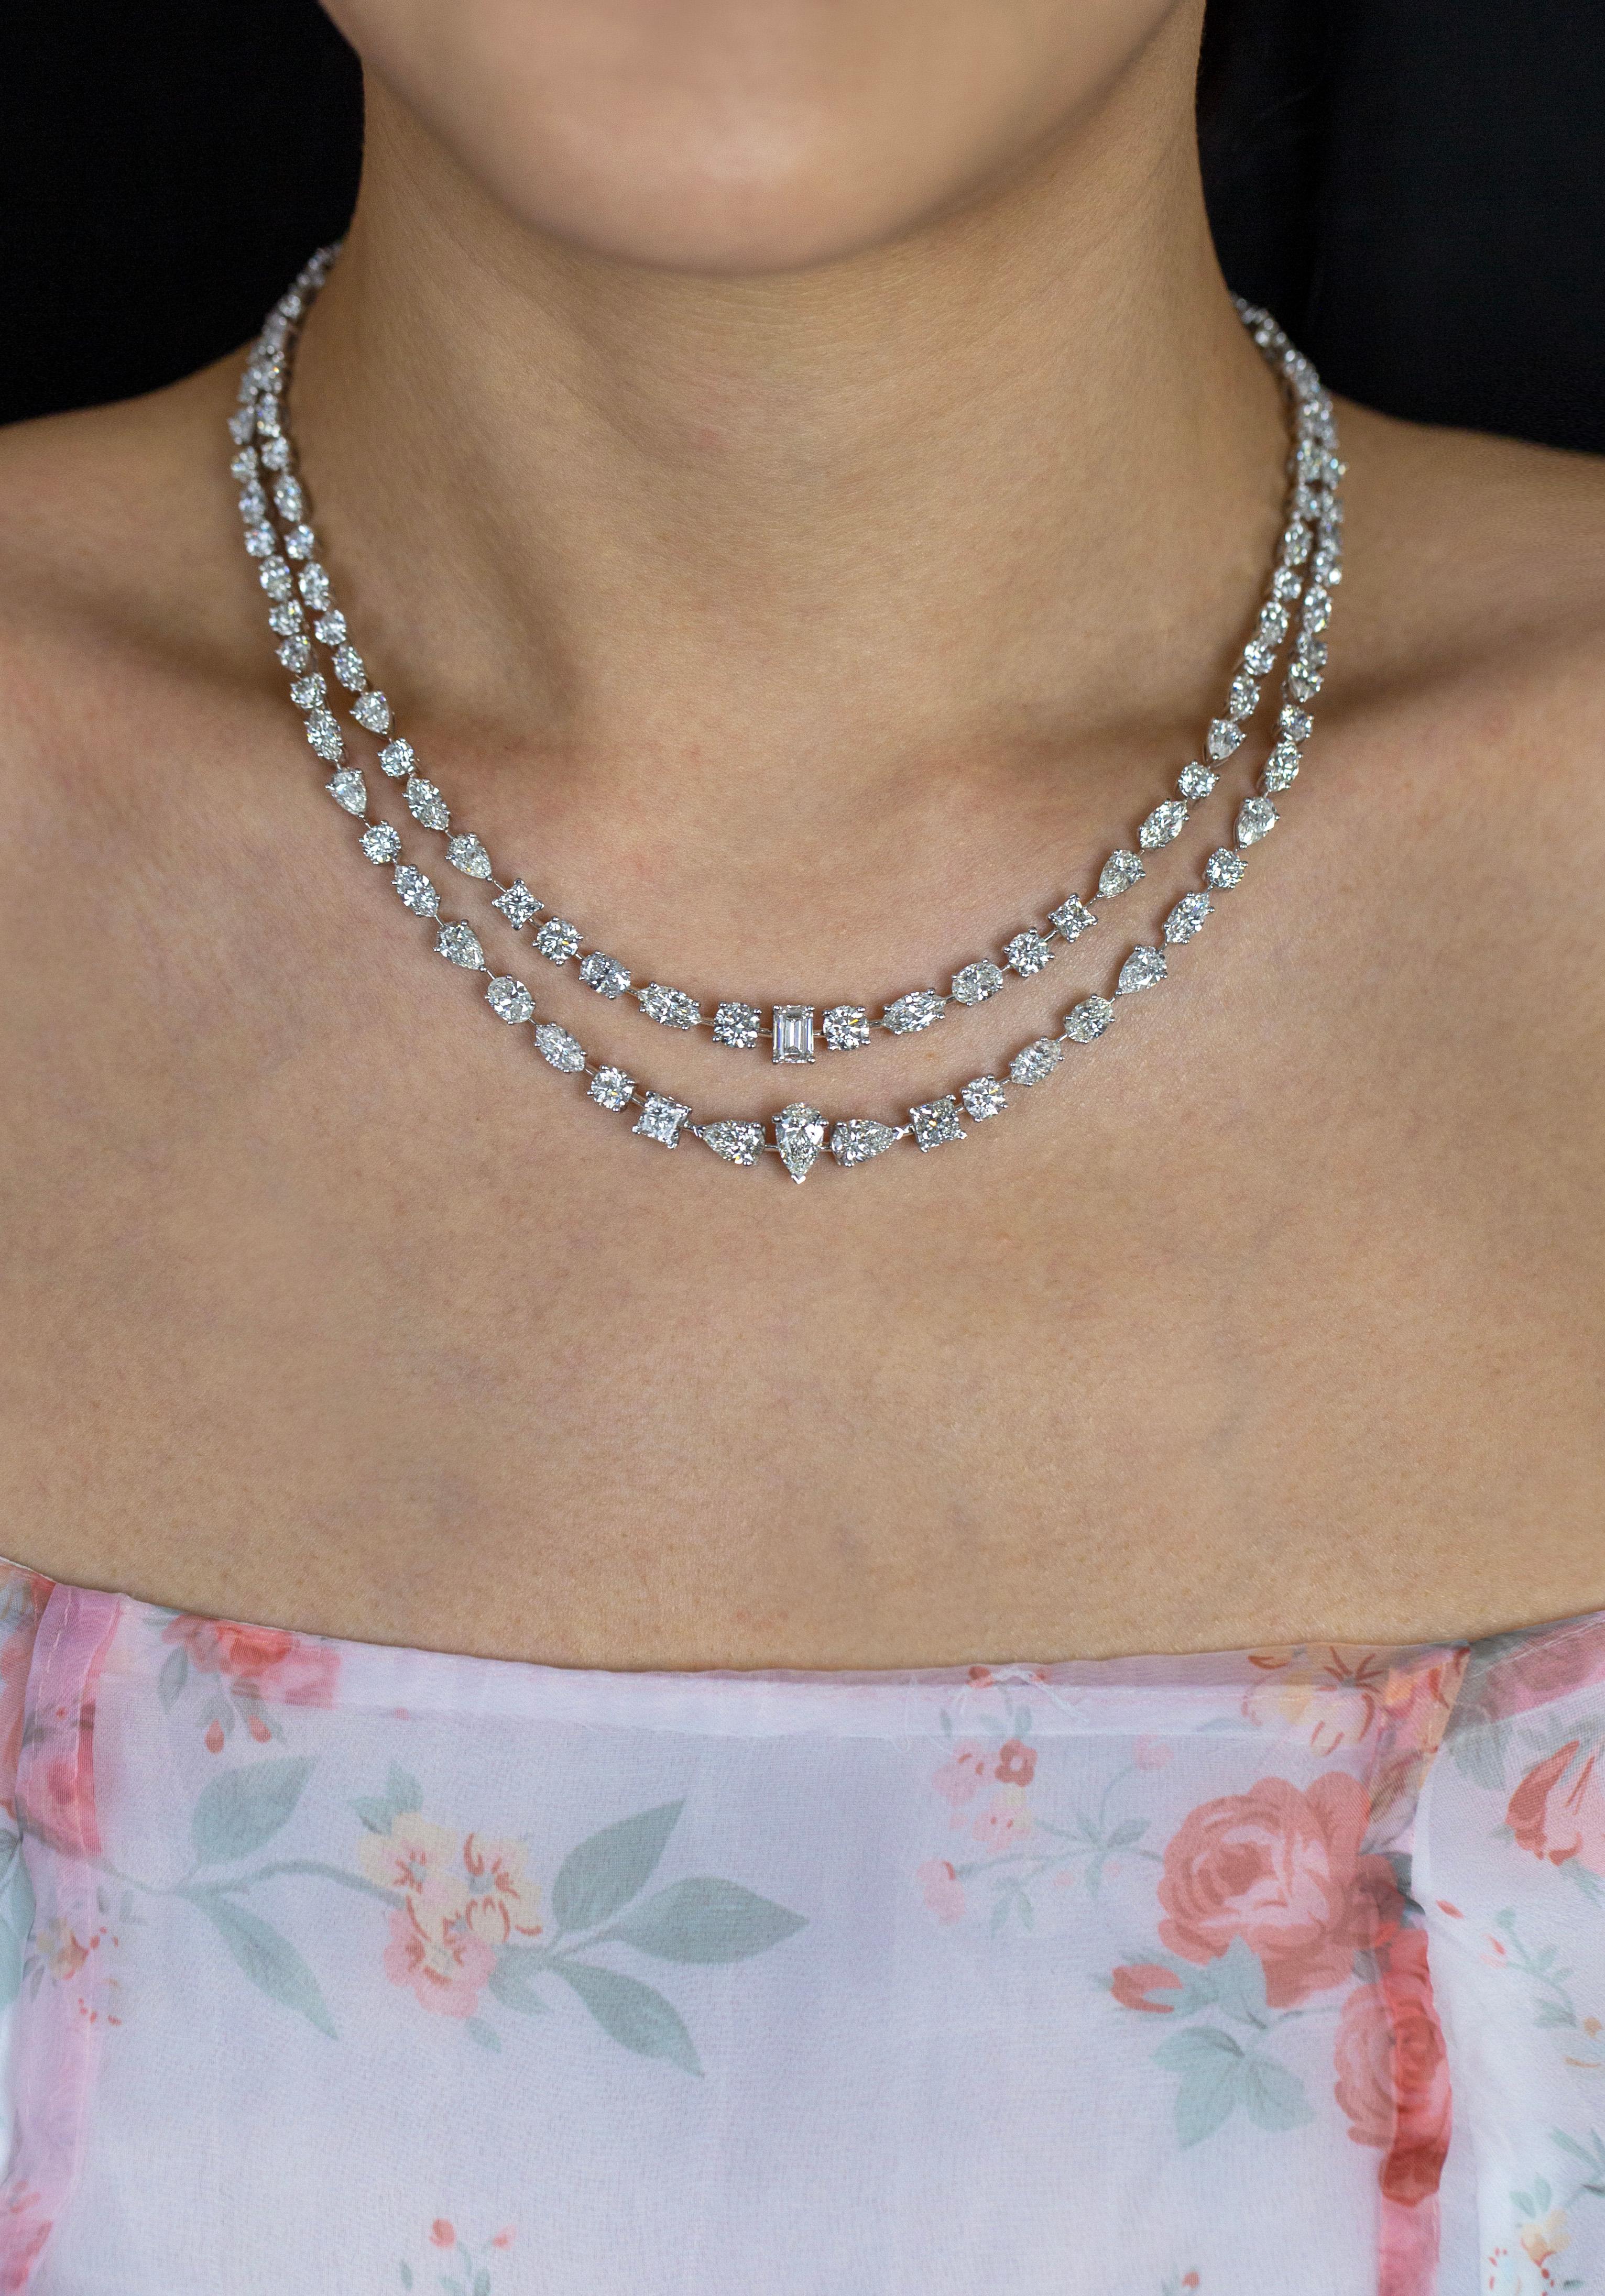 Contemporary Roman Malakov 36.92 Carat Total Mixed Cut Diamond Two-Row Pendant Necklace